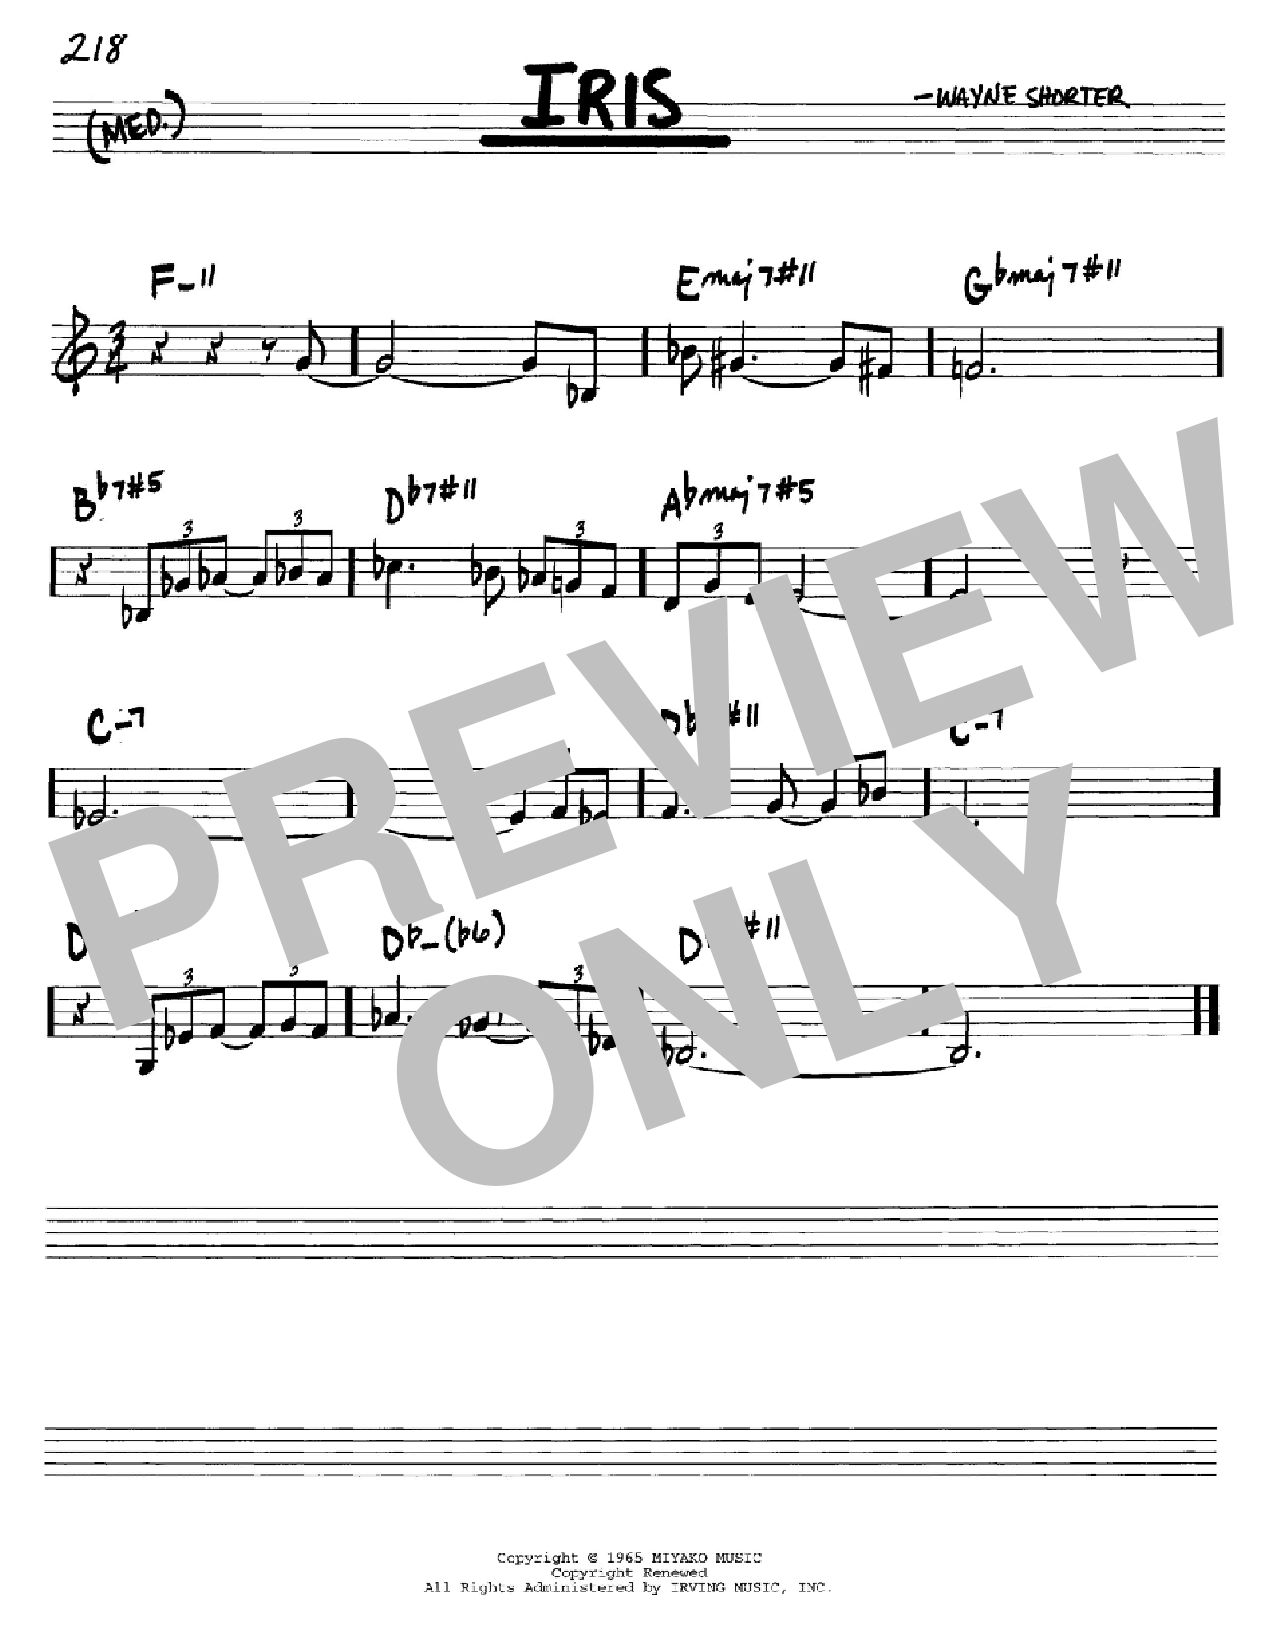 Wayne Shorter Iris Sheet Music Notes & Chords for Real Book - Melody & Chords - Eb Instruments - Download or Print PDF